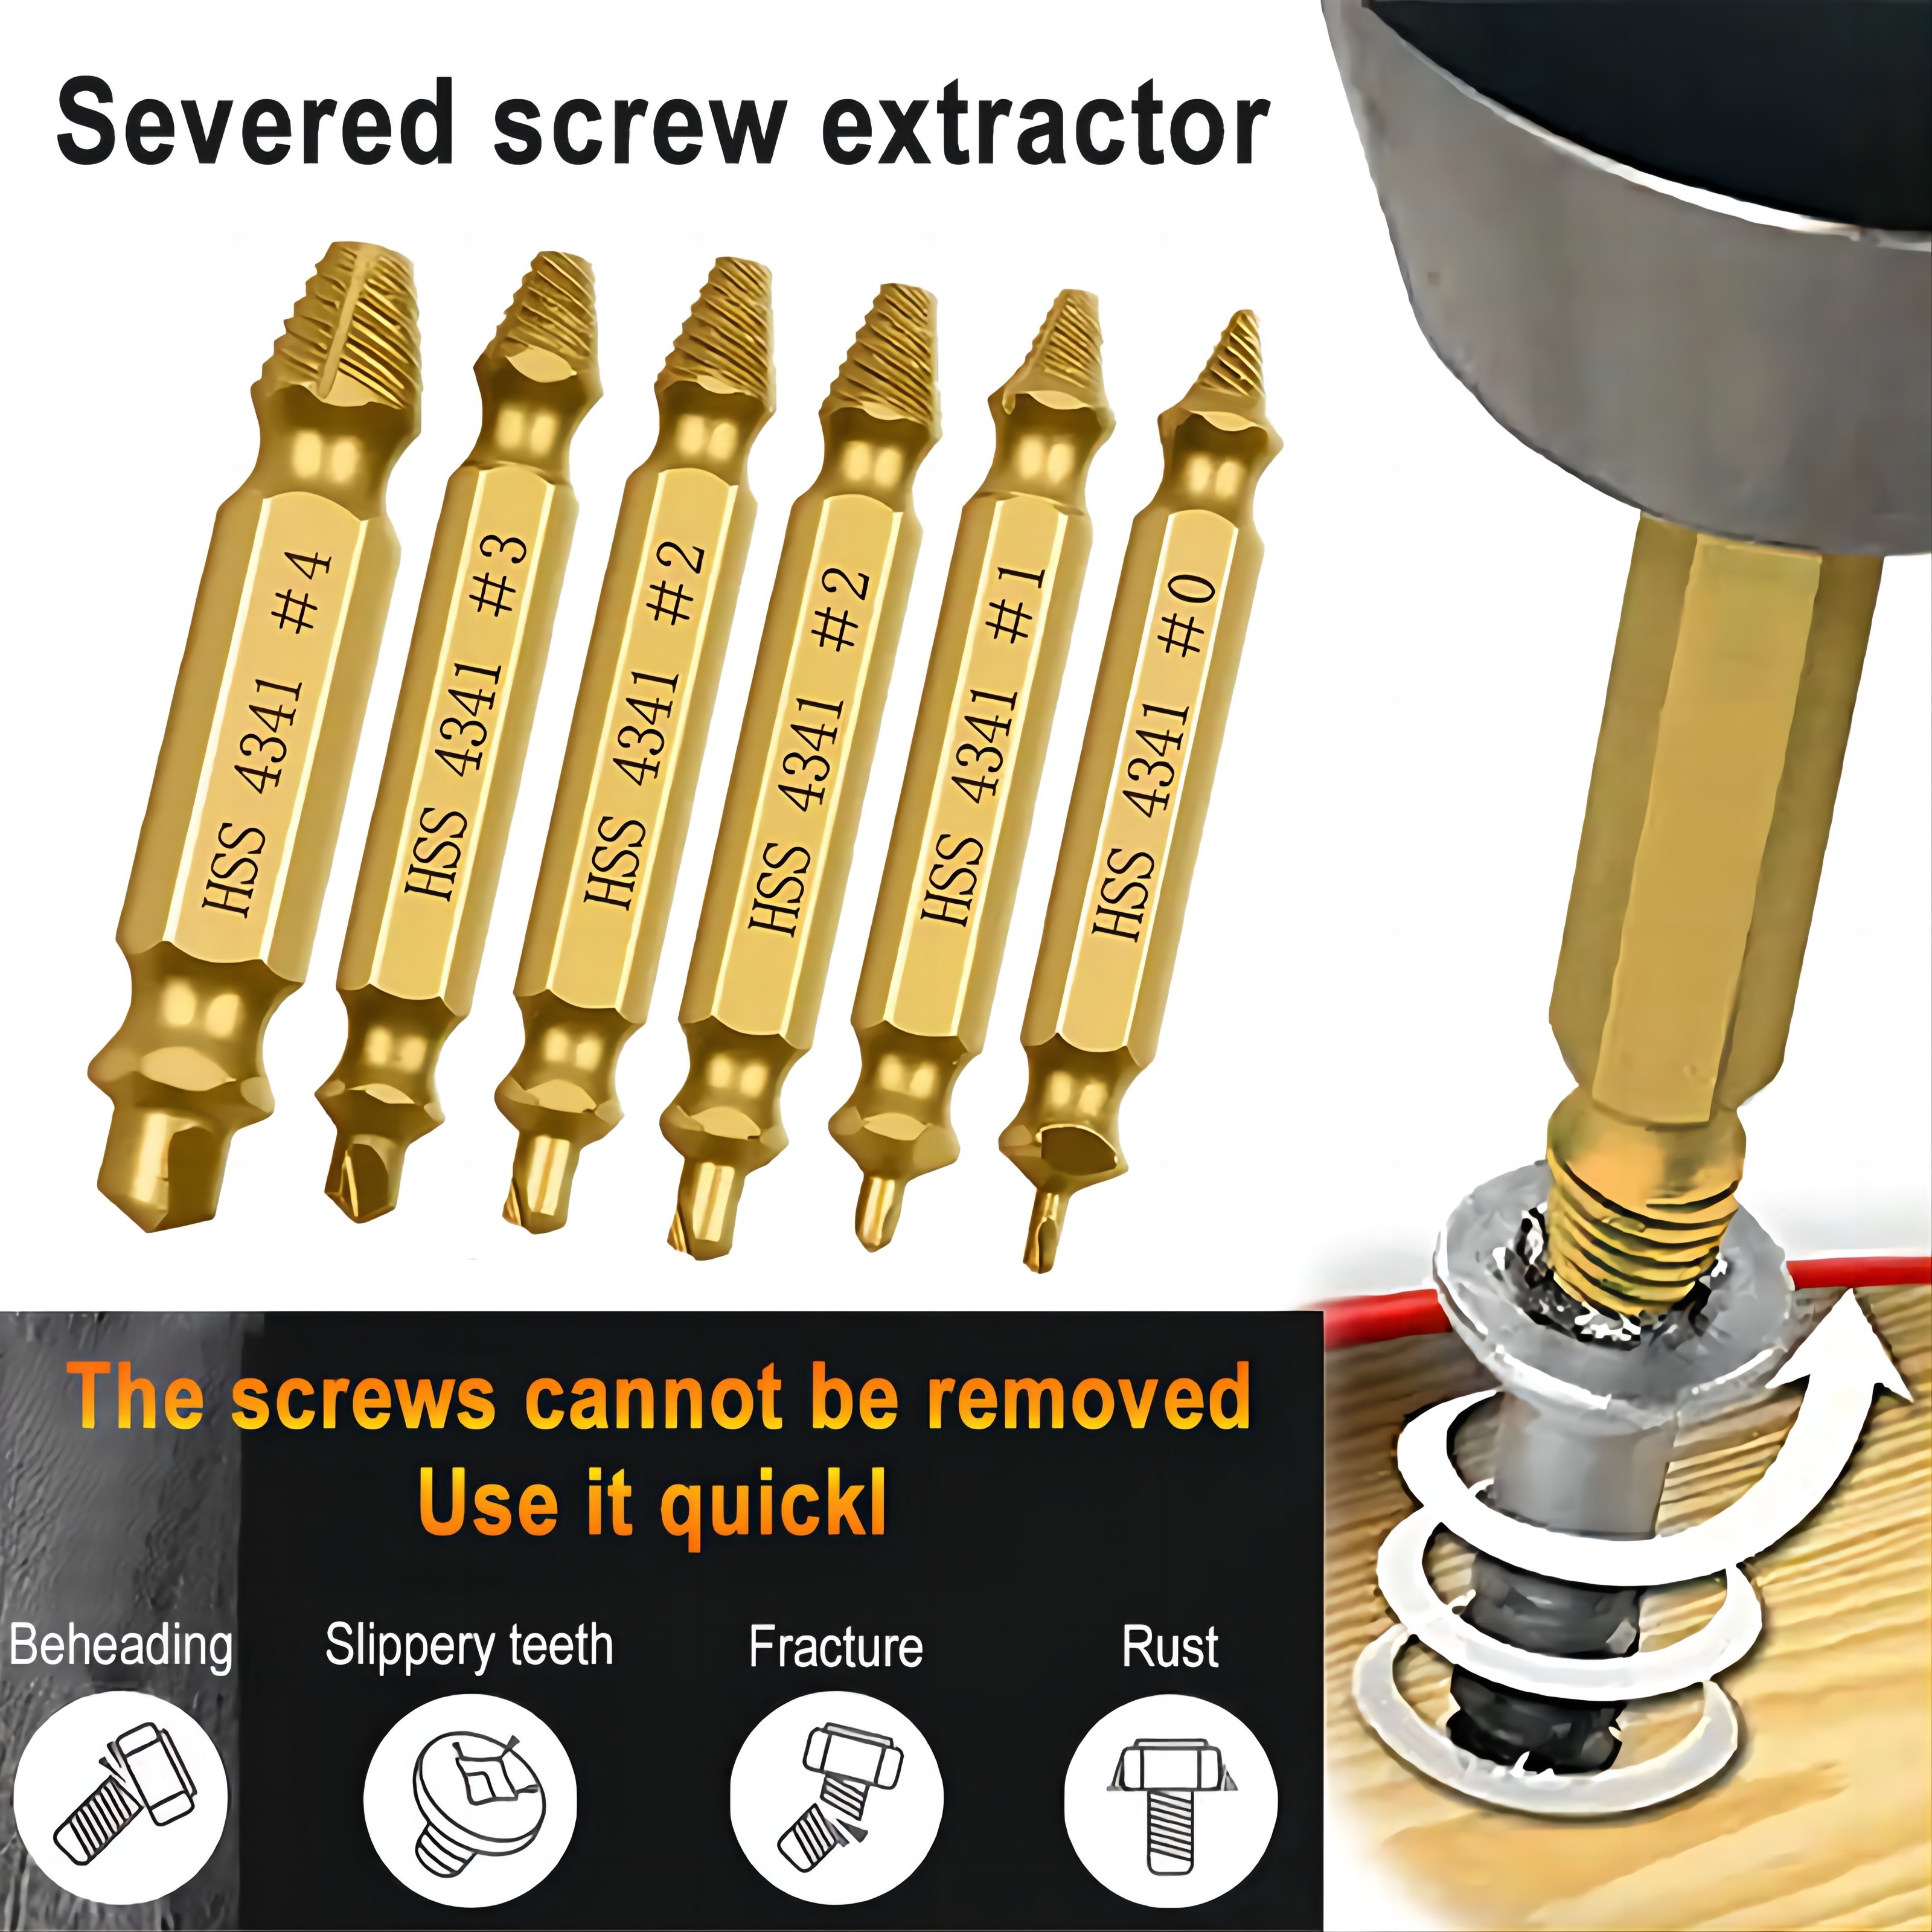 Autojack 5 Piece Screw Extractor Set Damaged Screw Remover Tools